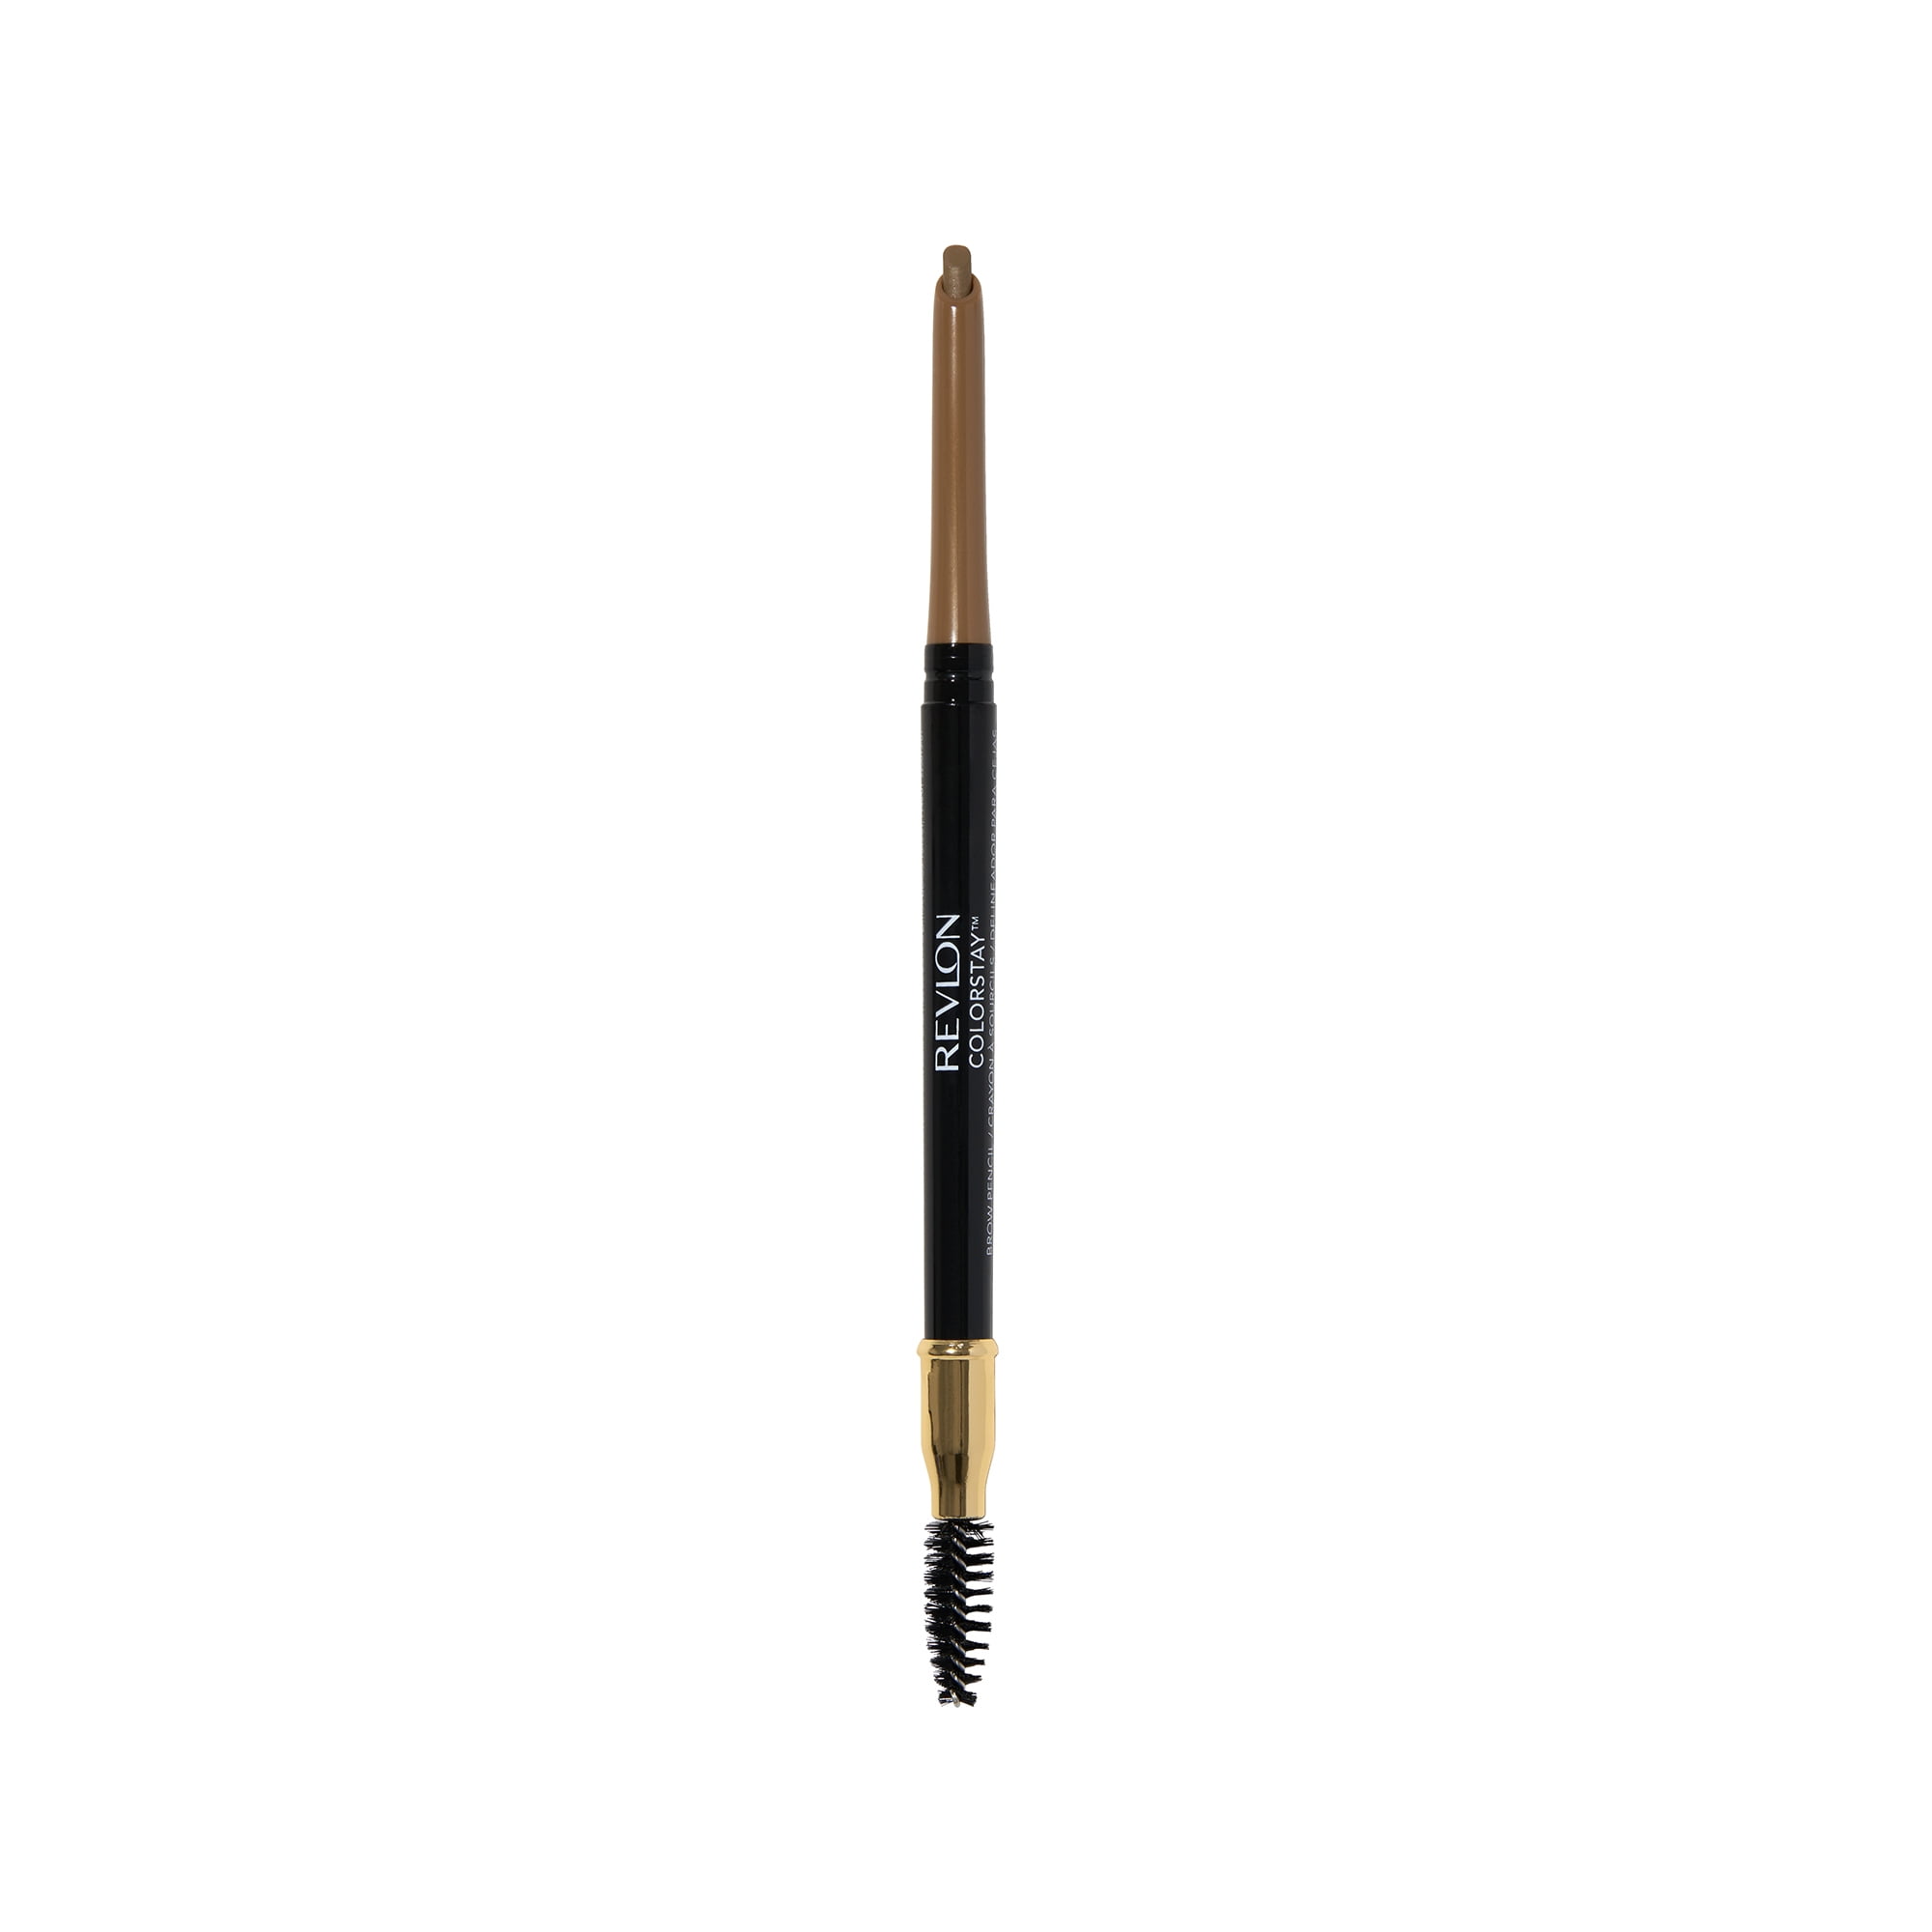 Revlon ColorStay Waterproof Longwearing Eyebrow Pencil, Retractable Angled Tip Applicator, 205 Blonde, 0.021 oz